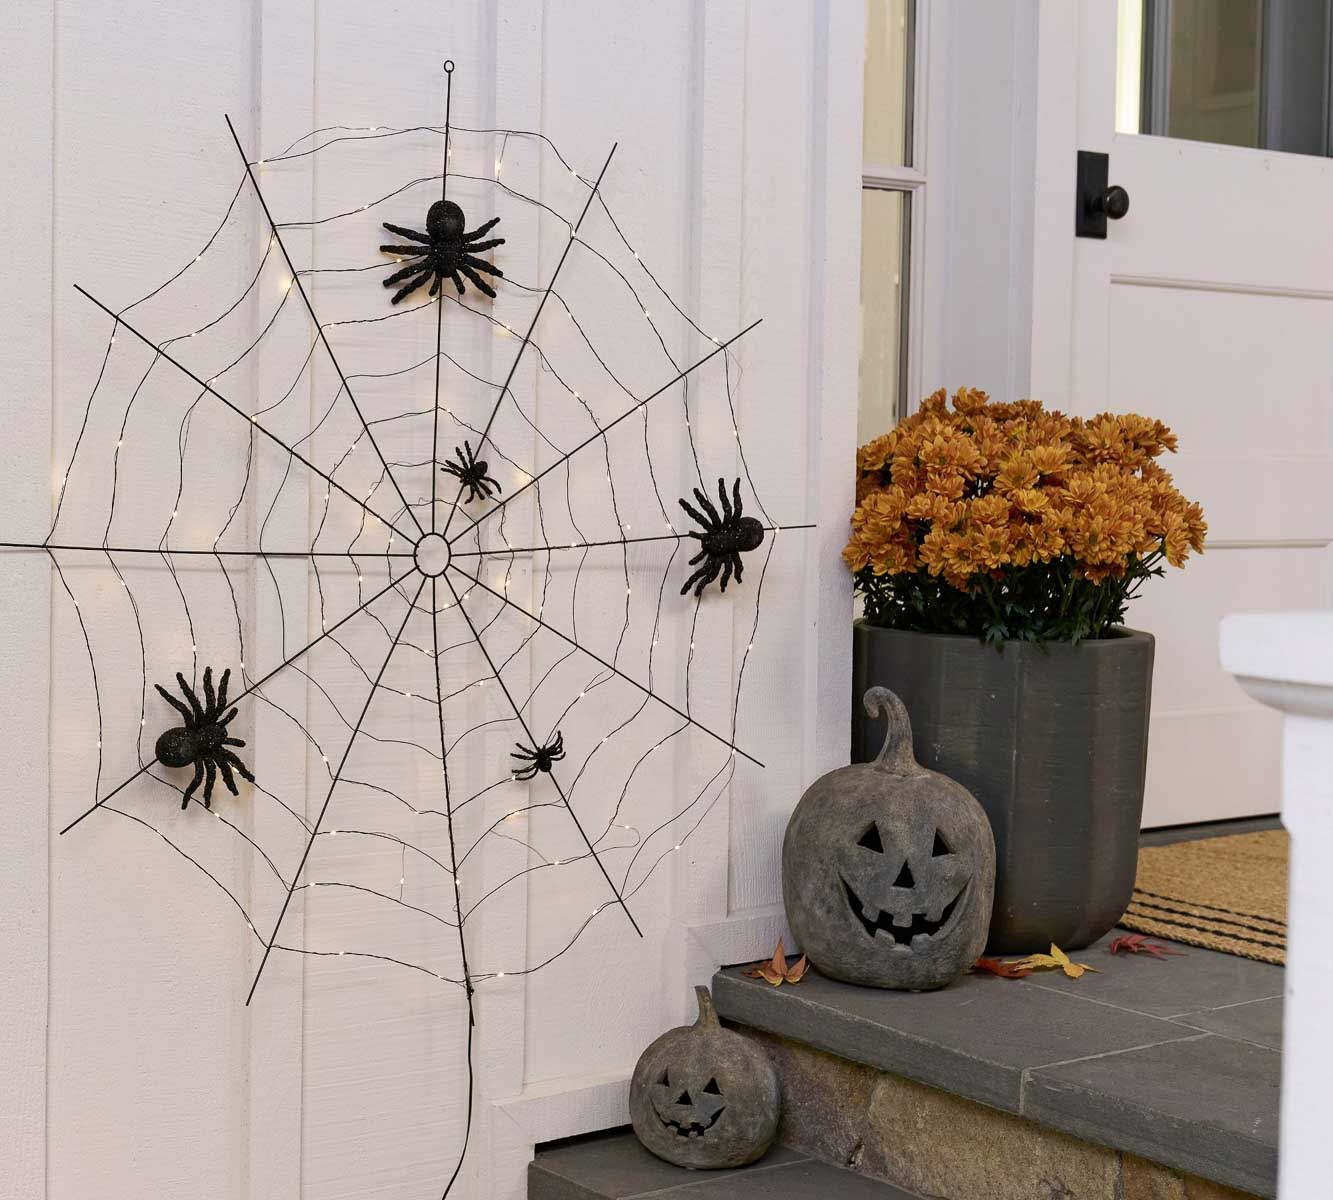 Lit spider web for front porch Halloween decor